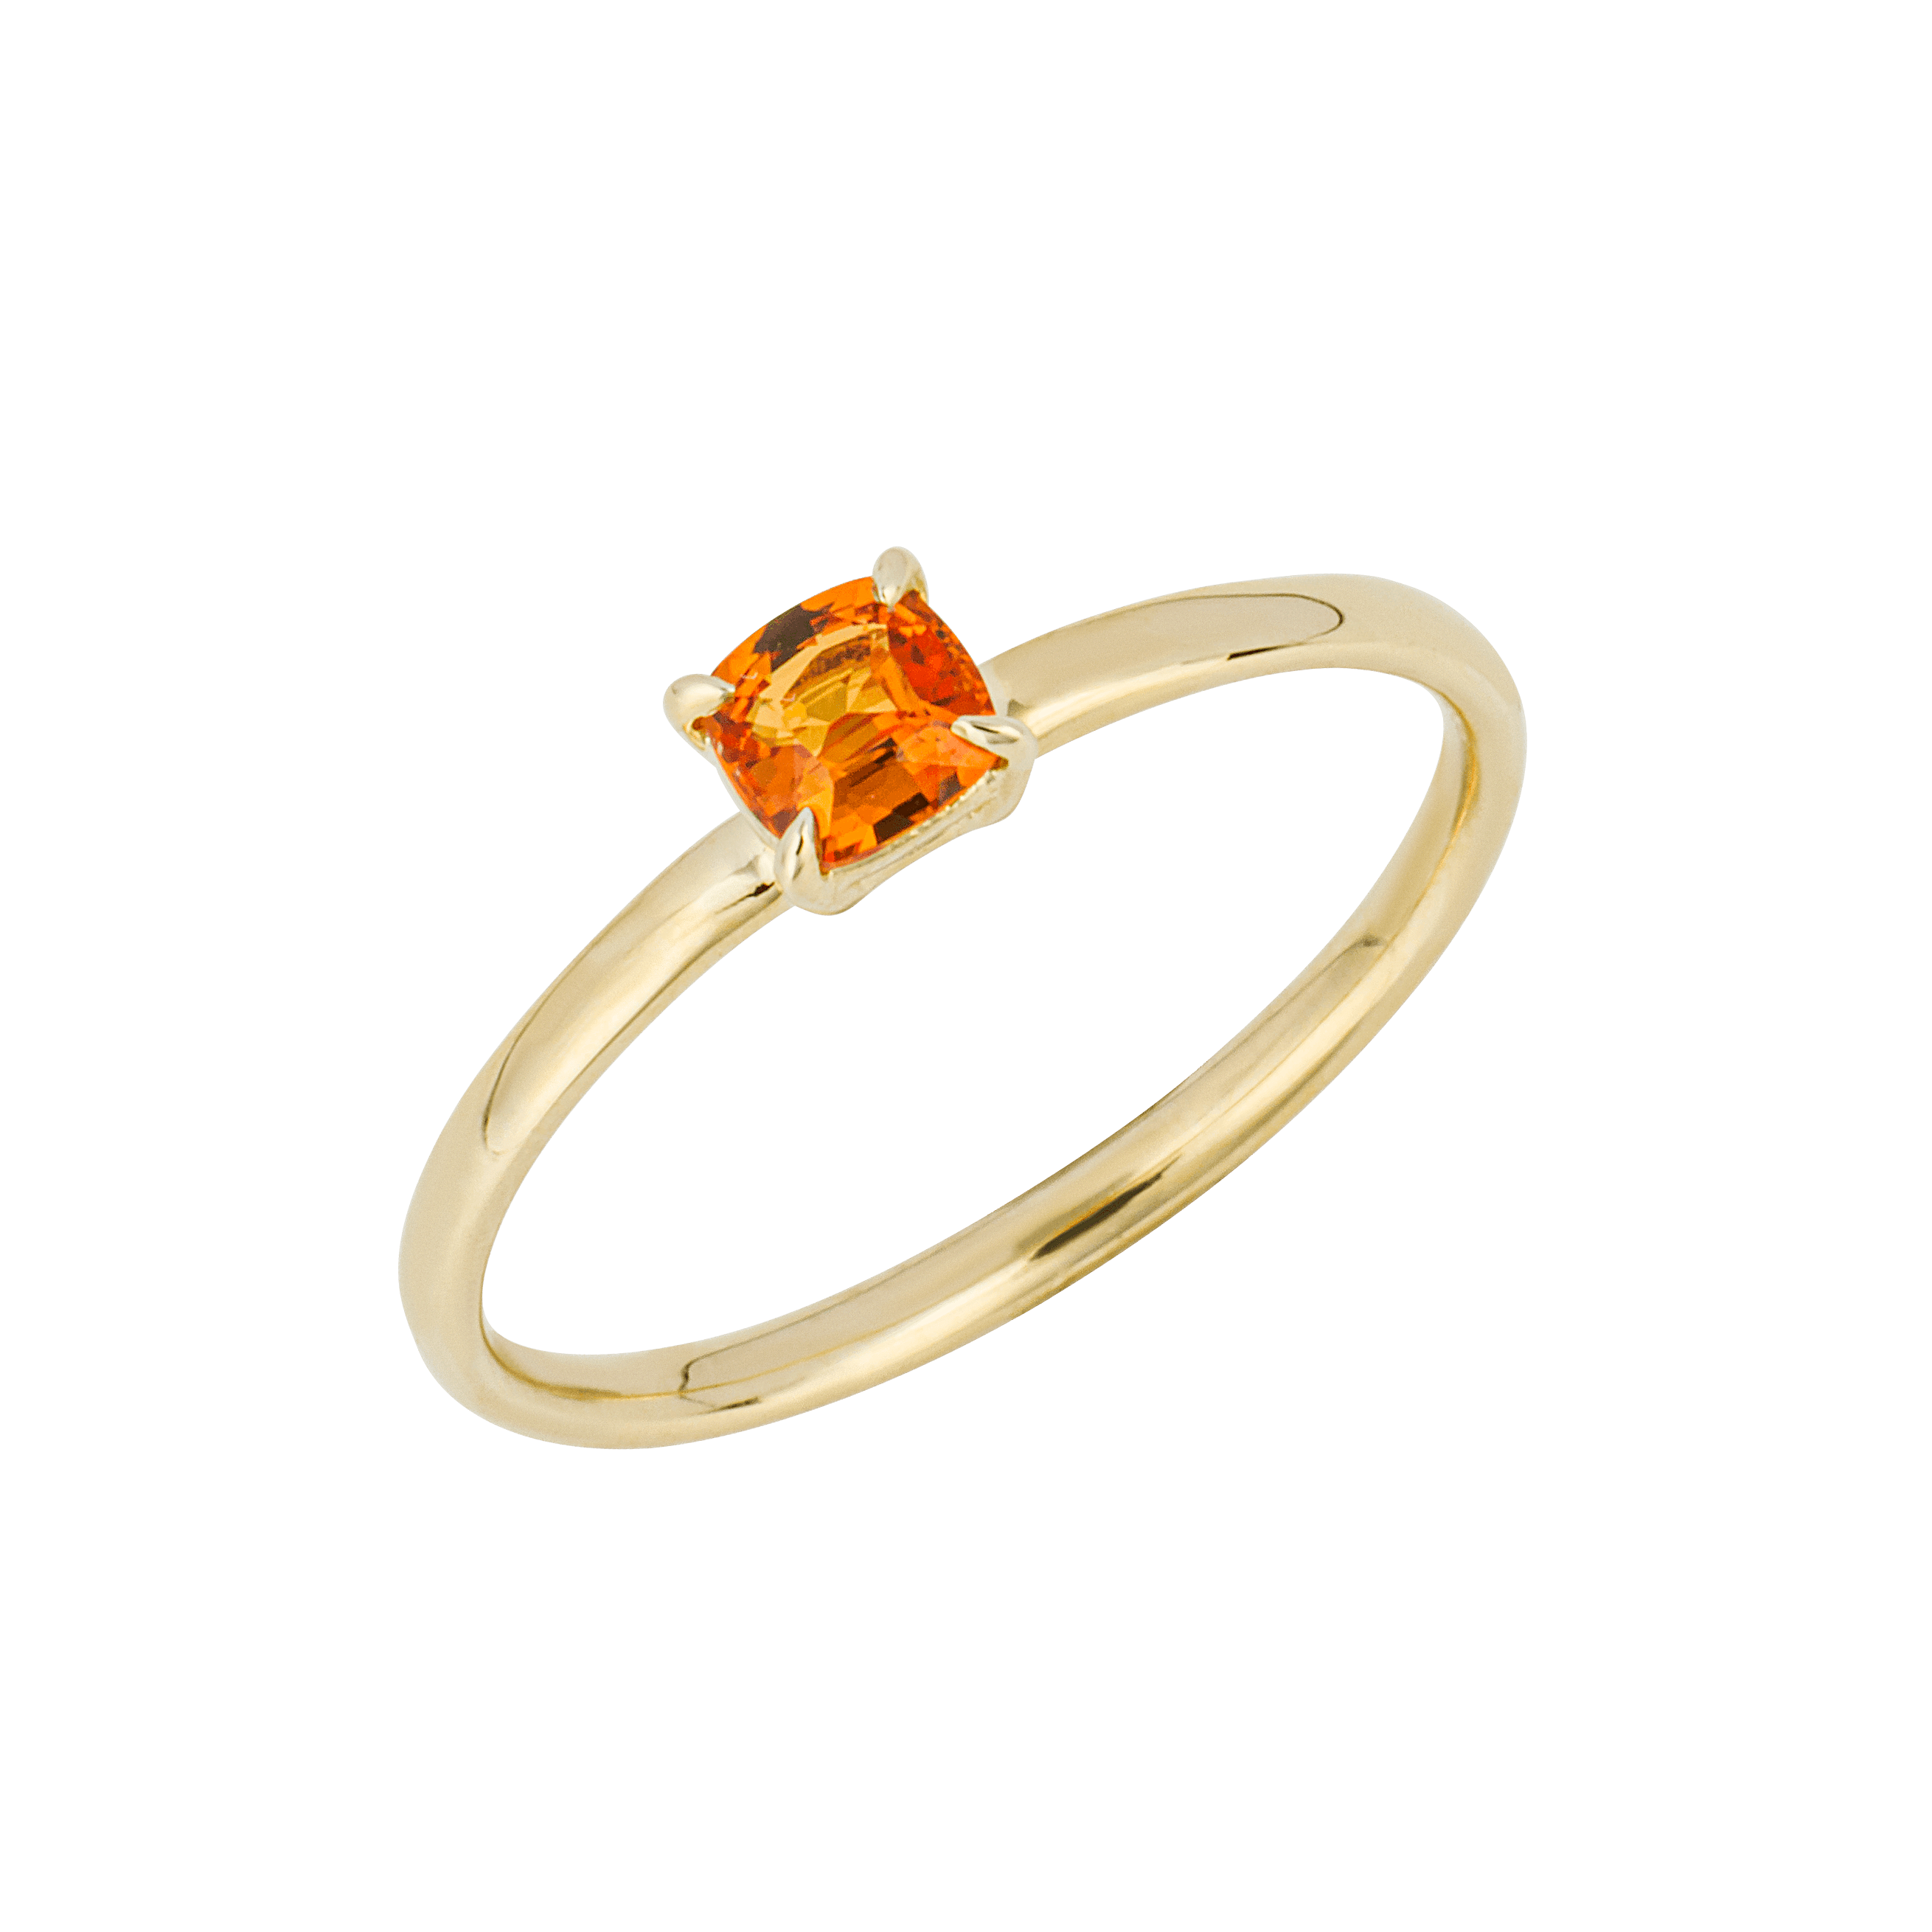 Cushion Cut Orange Sapphire Ring in 9ct Yellow Gold - Robert Anthony Jewellers, Edinburgh